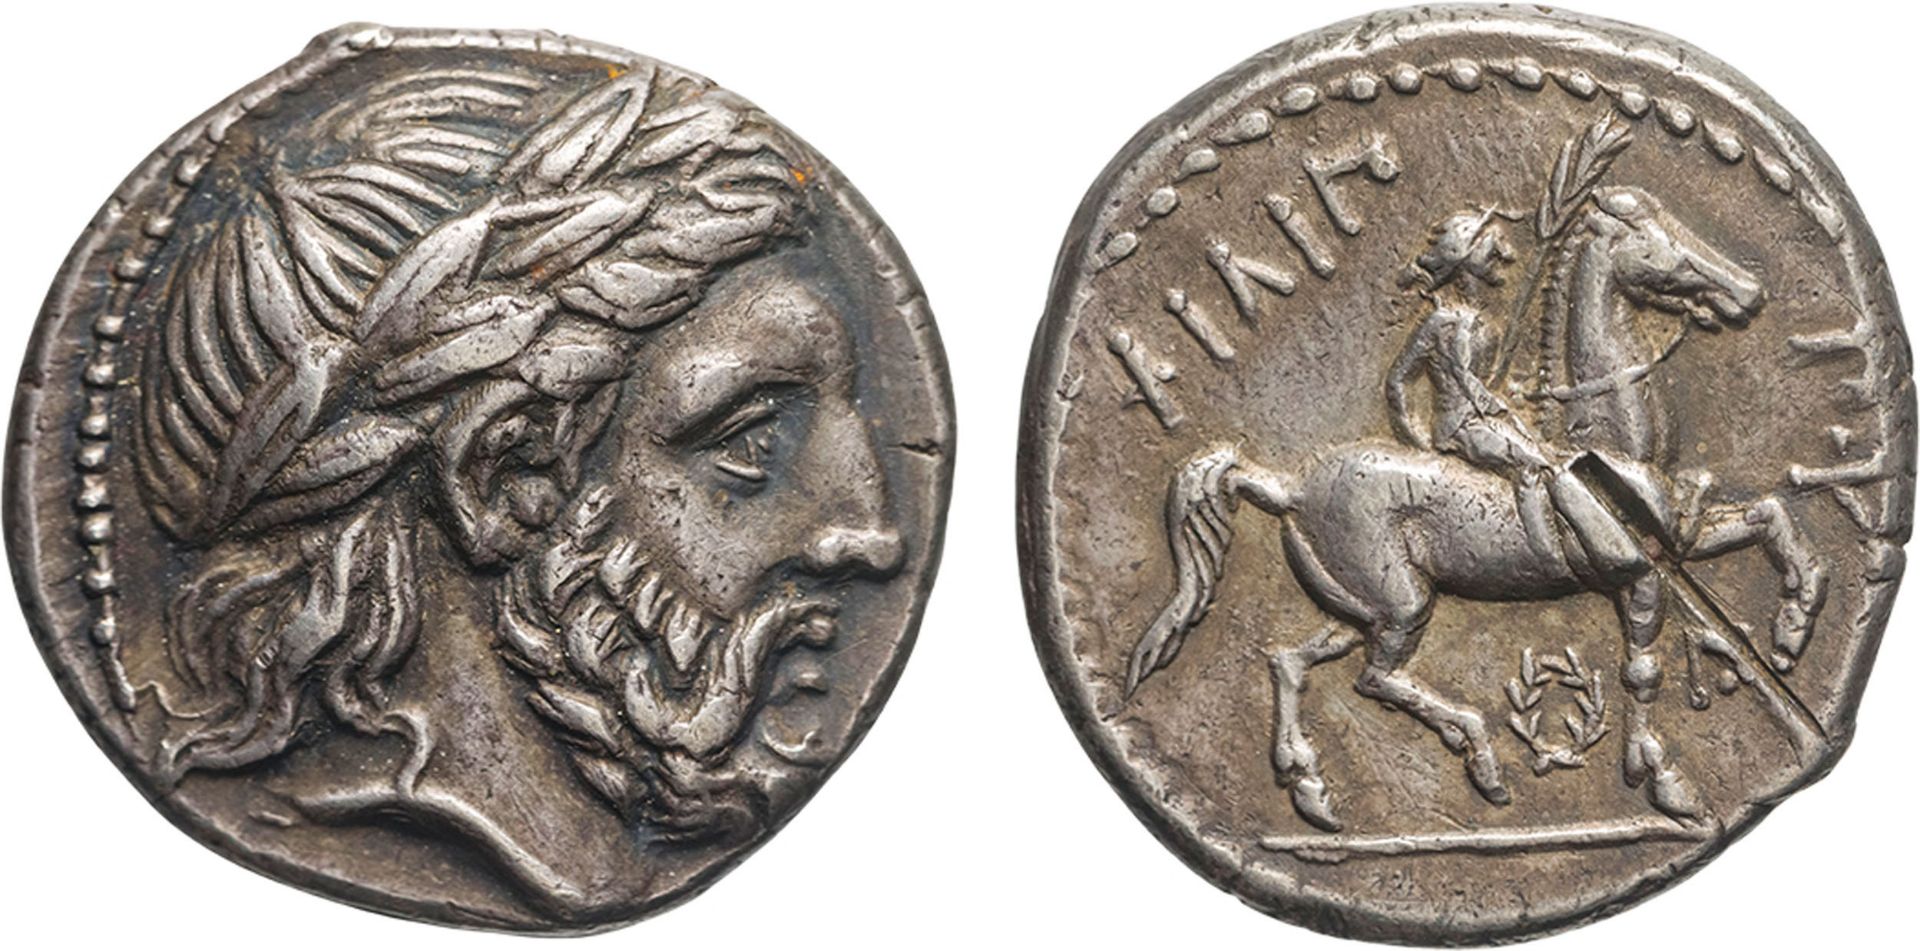 MONETE GRECHE. MACEDONIA. FILIPPO II (359-336 A.C.). TETRADRACMA